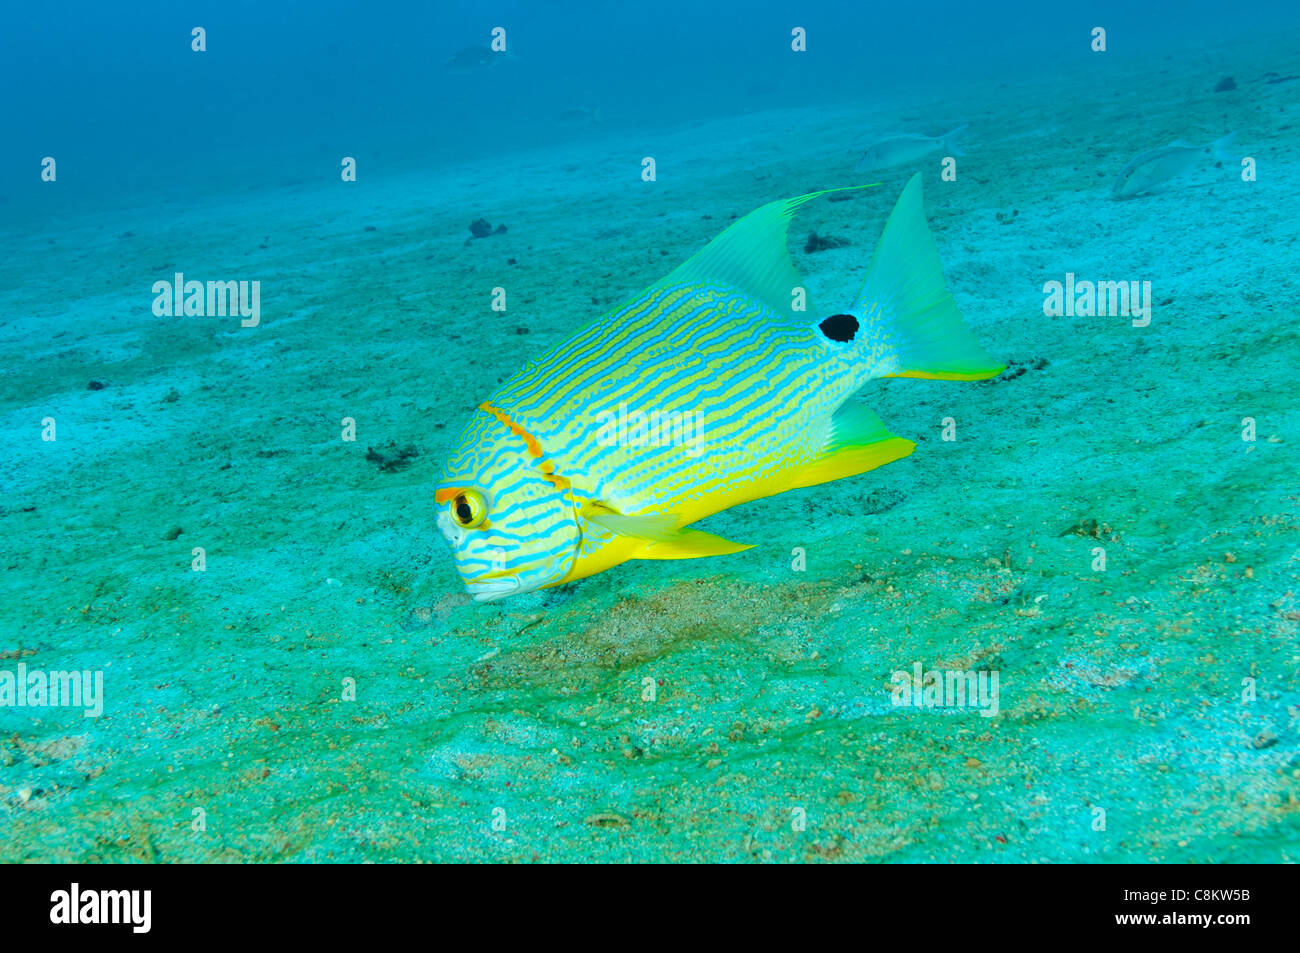 Salifin snapper, Sangalaki, Kalimantan, Indonesia Stock Photo